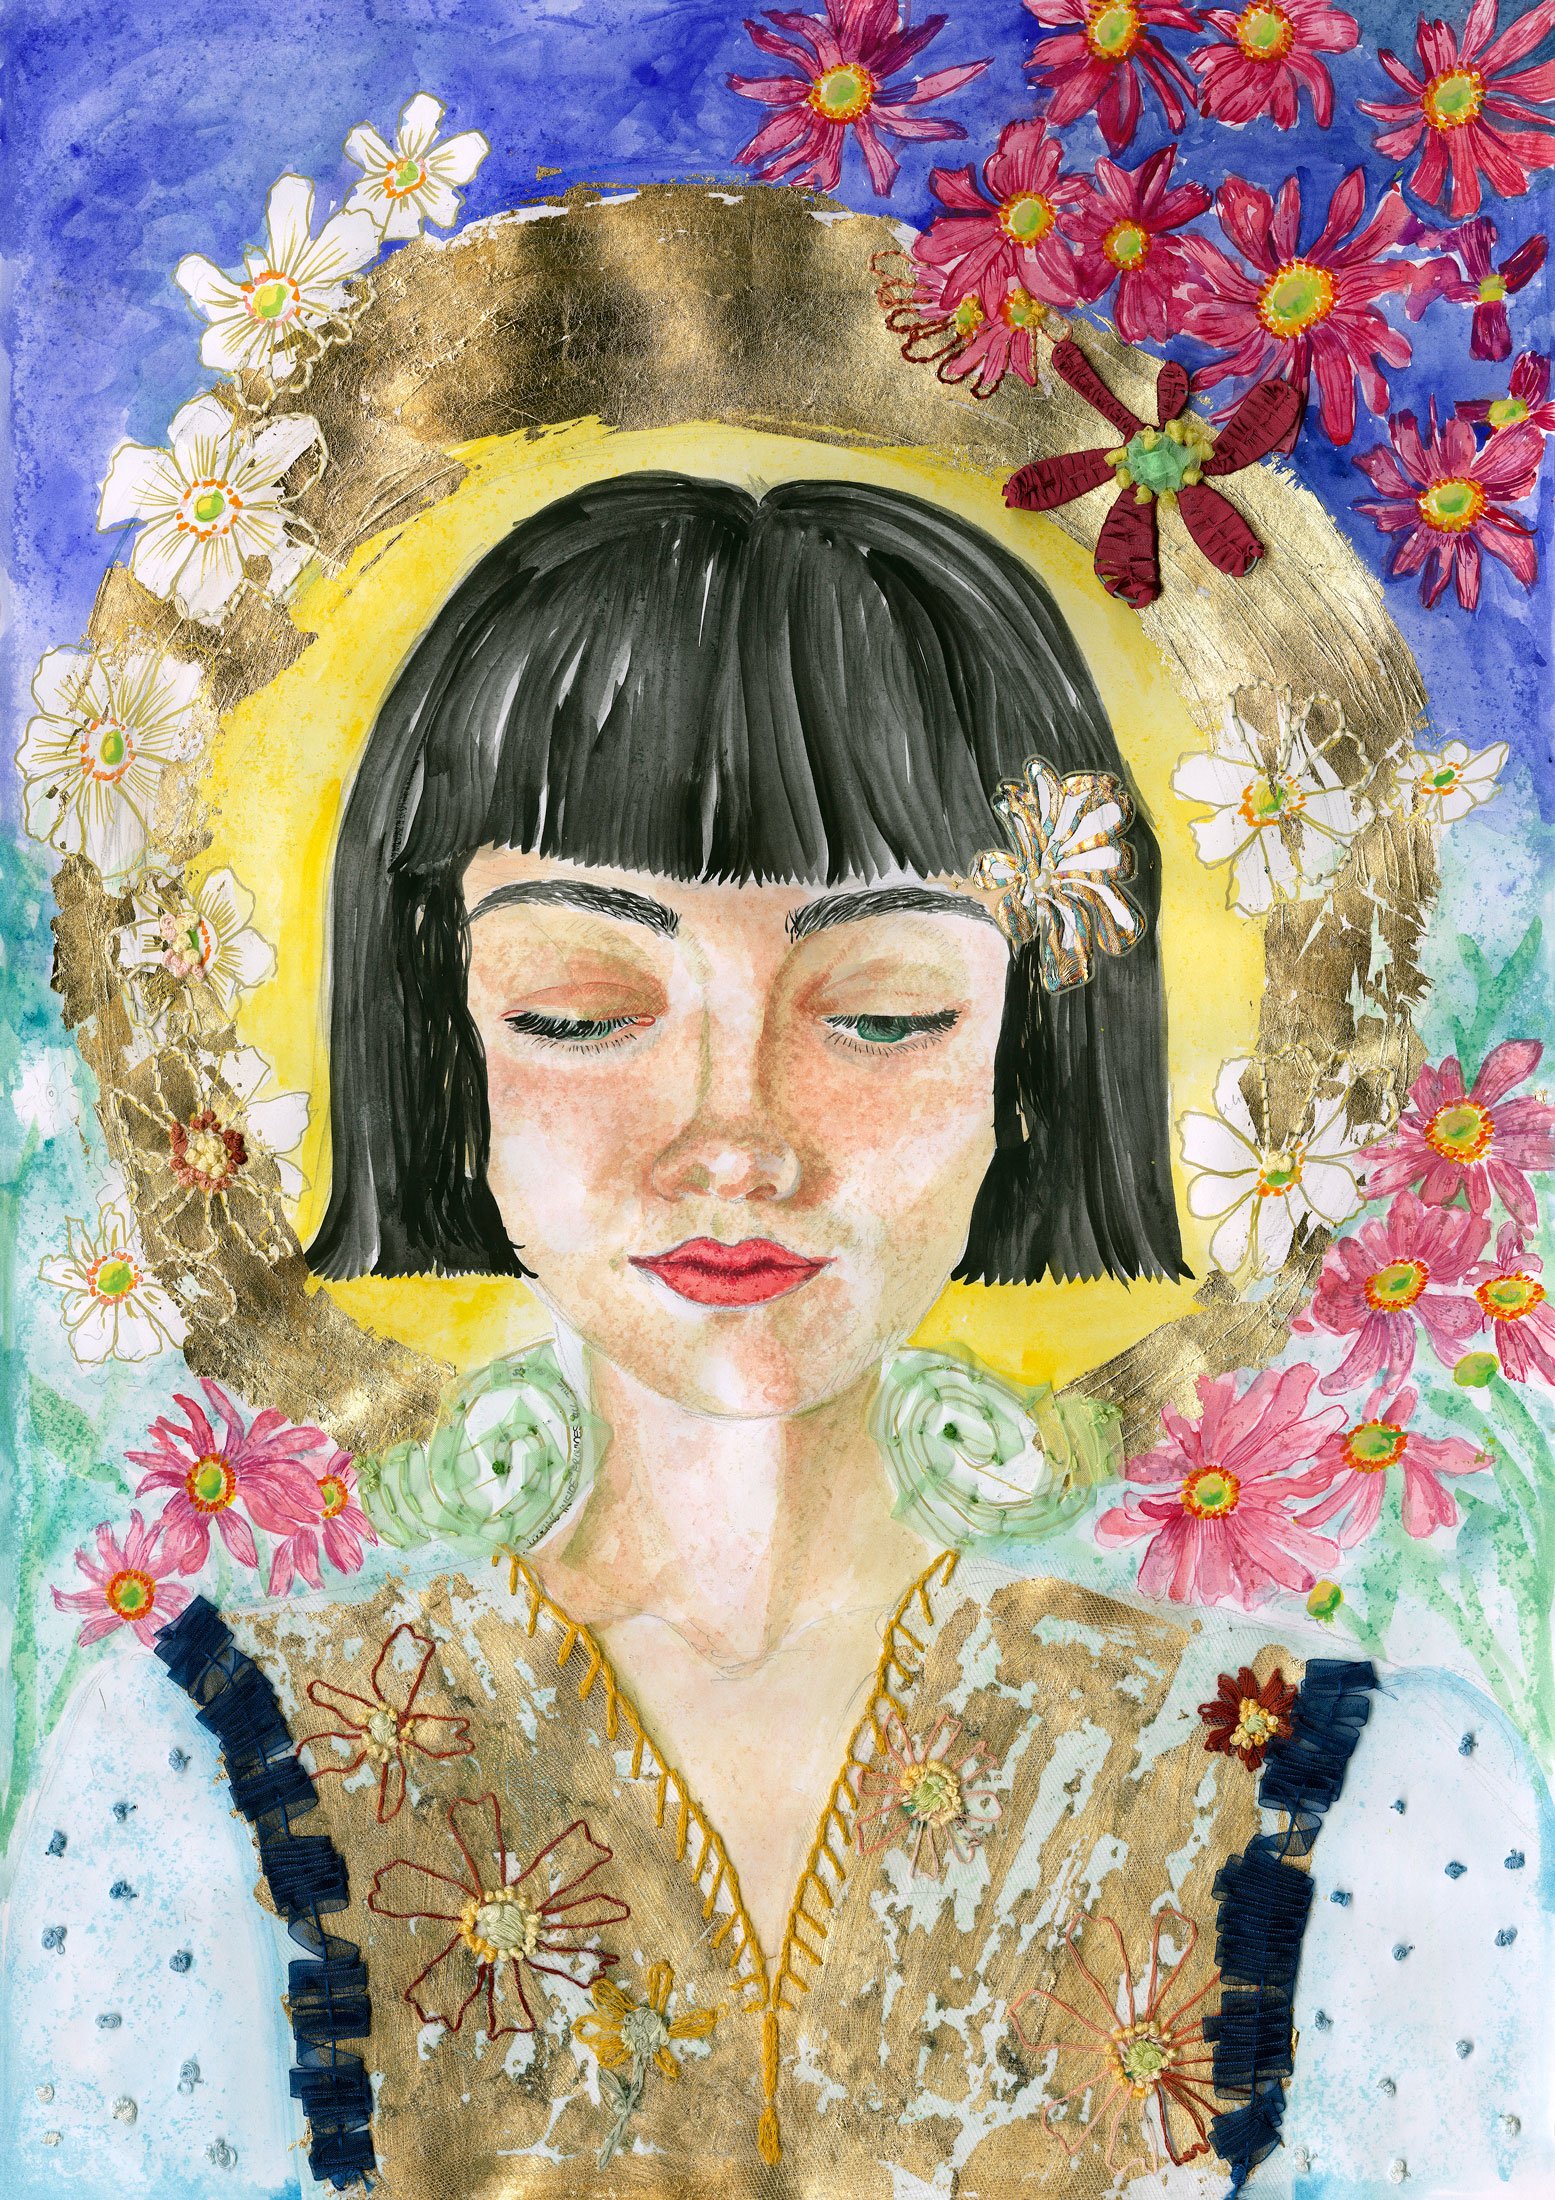 Copy-of-FLOWER-GIRL-Mixed-media-on-watercolor-paper--420x459-mm-Amanda-Ross-McDonald--2023--.jpg